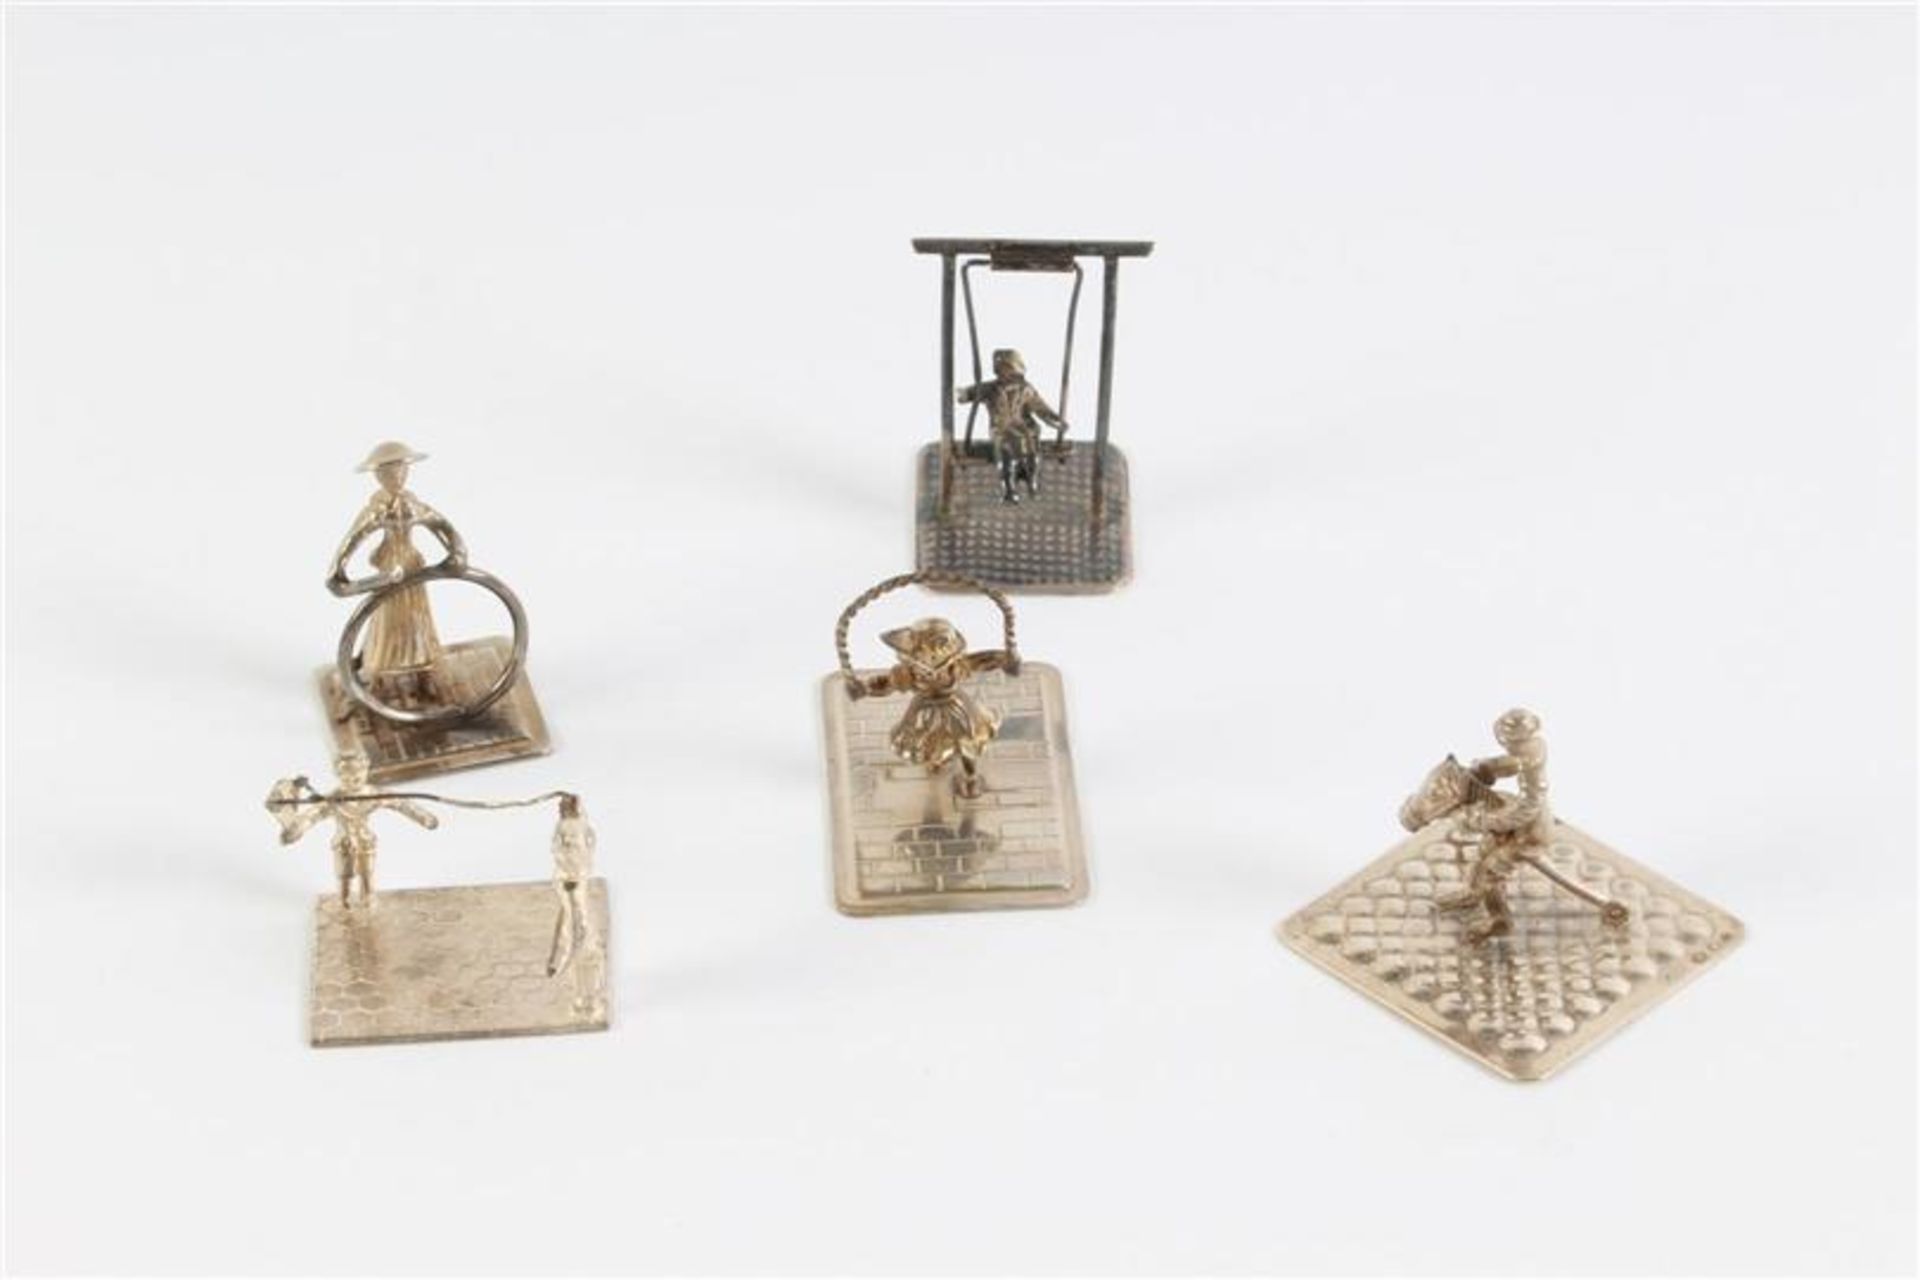 Vijf zilveren miniaturen, 'Spelend kind'. Gewicht: 50 g.